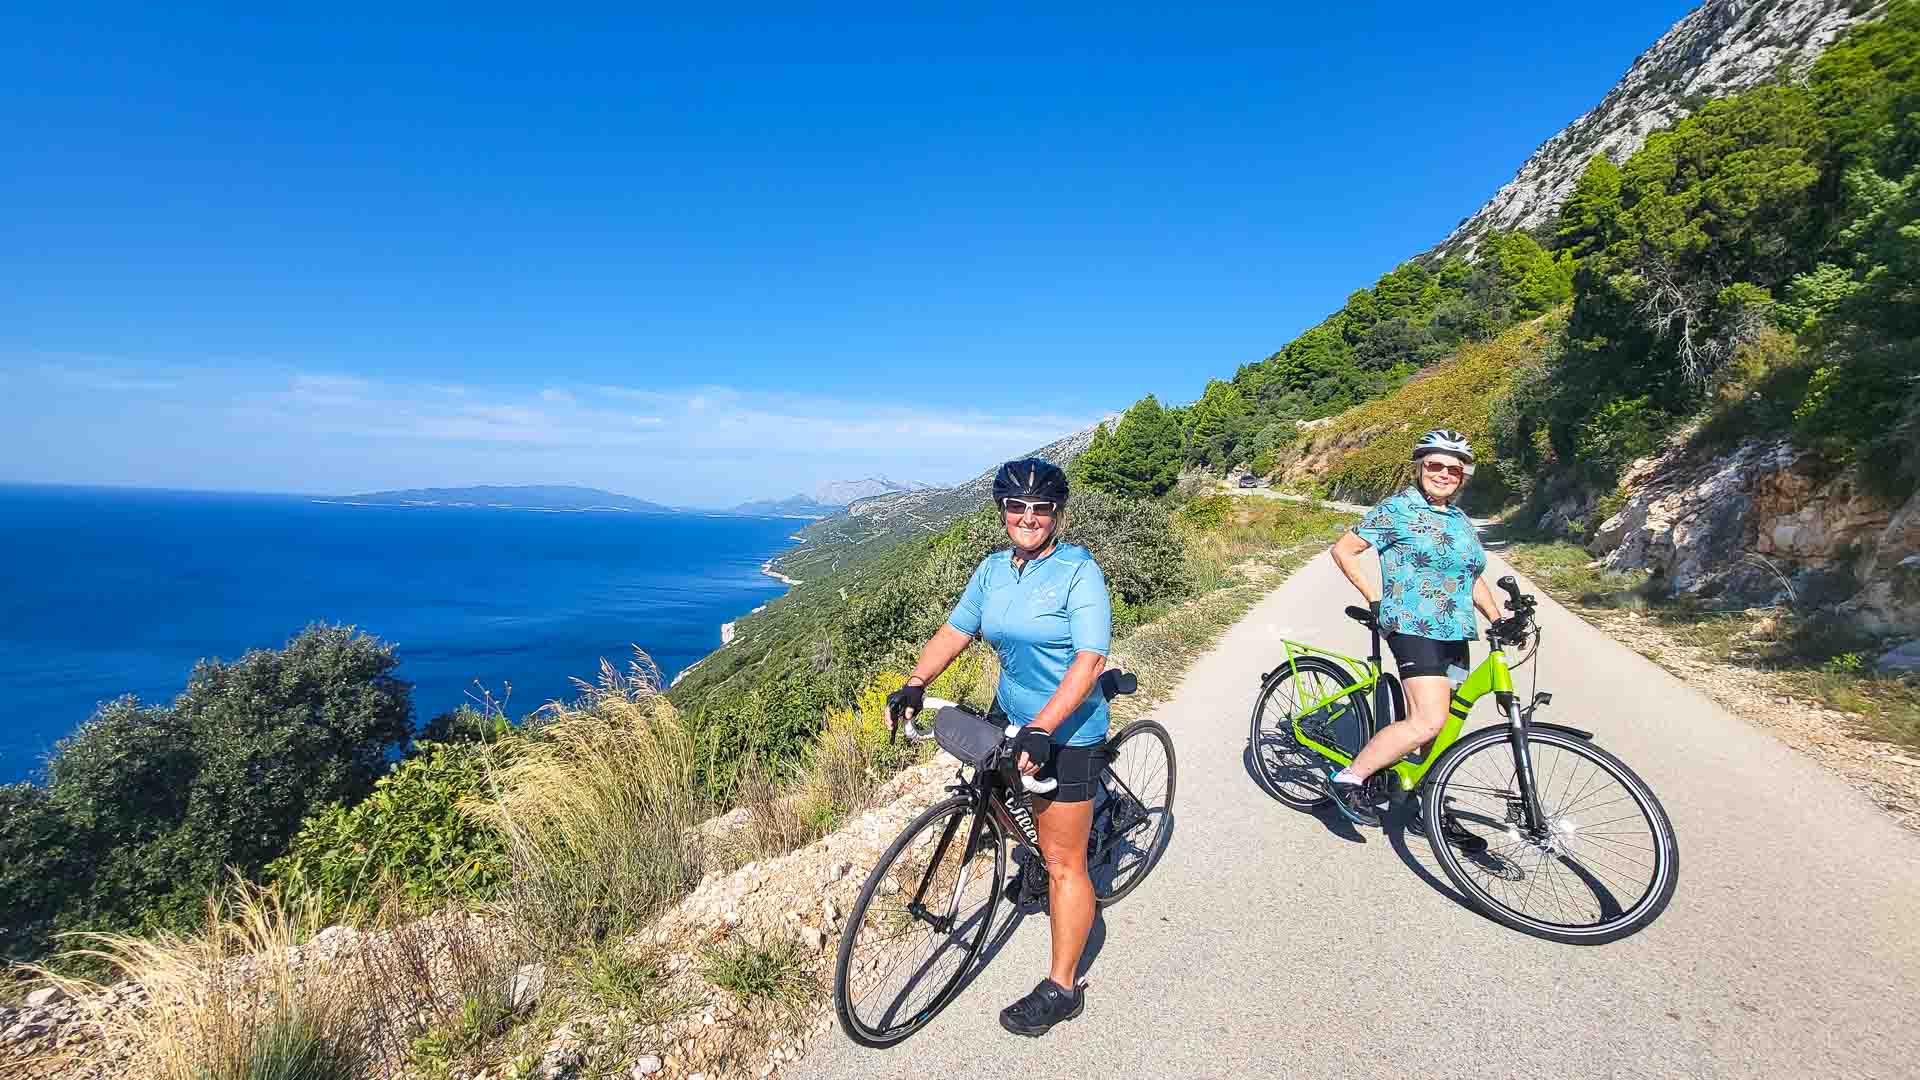 Two cyclists by the sea in Dalmatia, Croatia